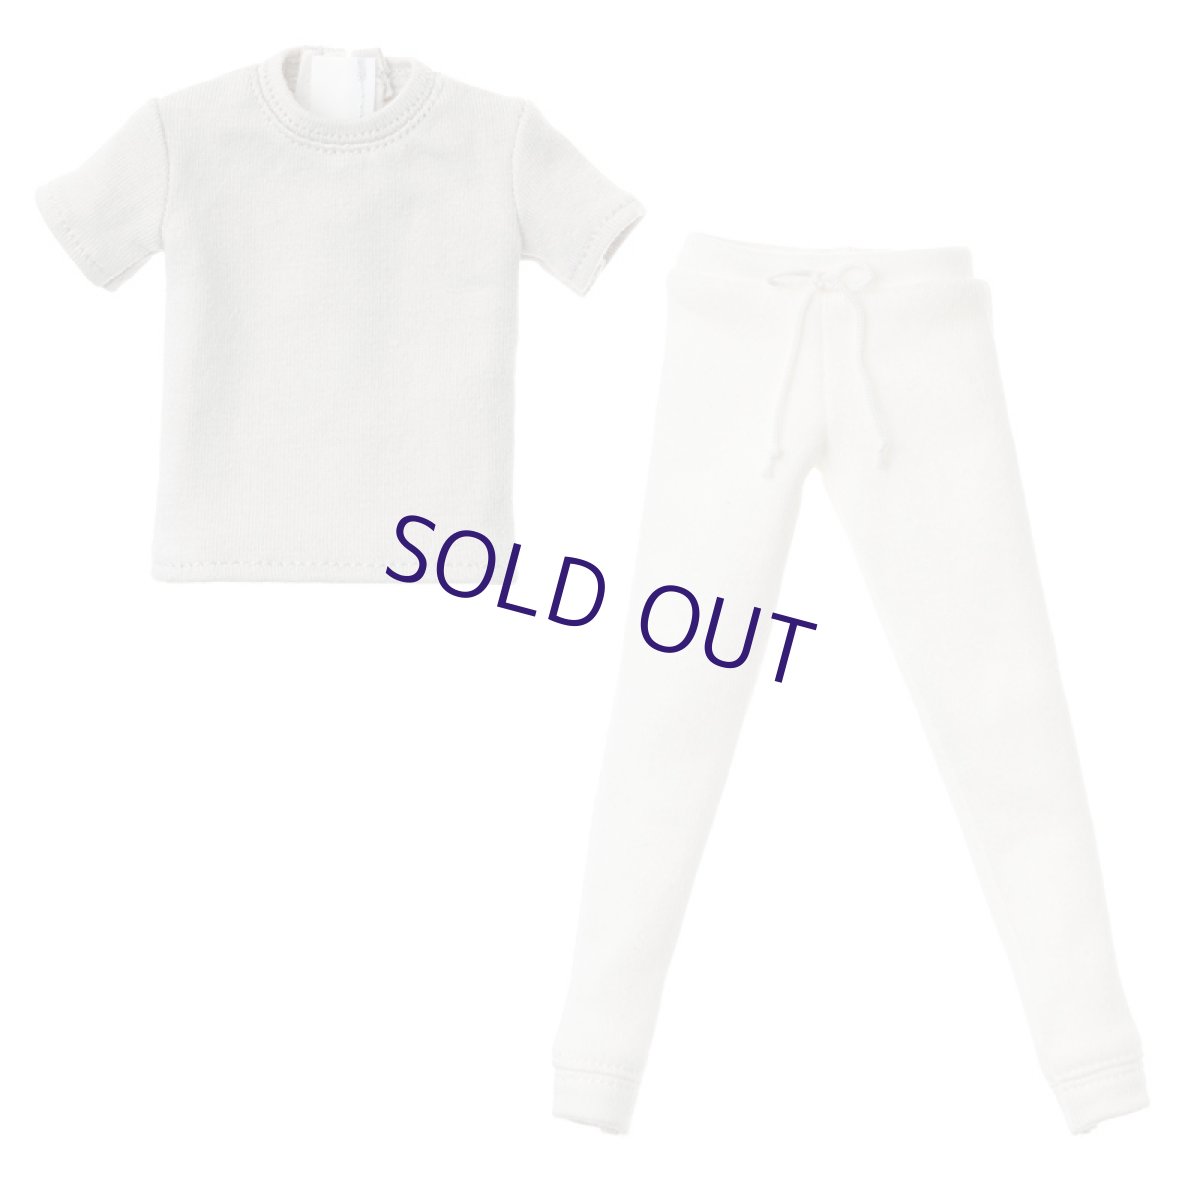 Photo1: Dress: Men's Sweat Pants Set, White / メンズスウェットパンツセット ホワイト (1)